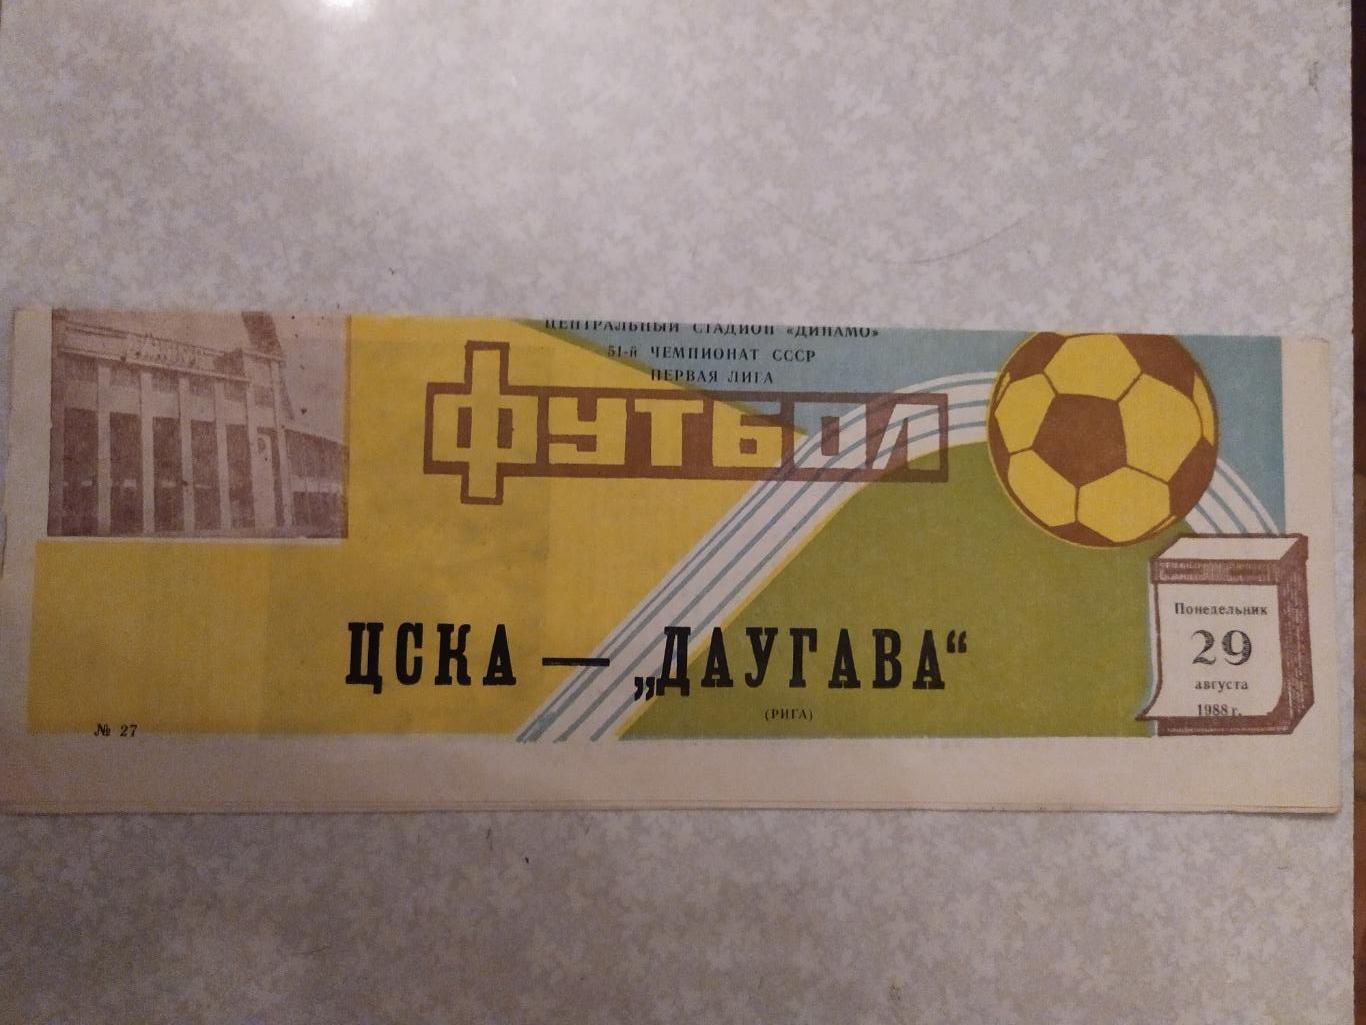 ЦСКА -Даугава 29.08.1988